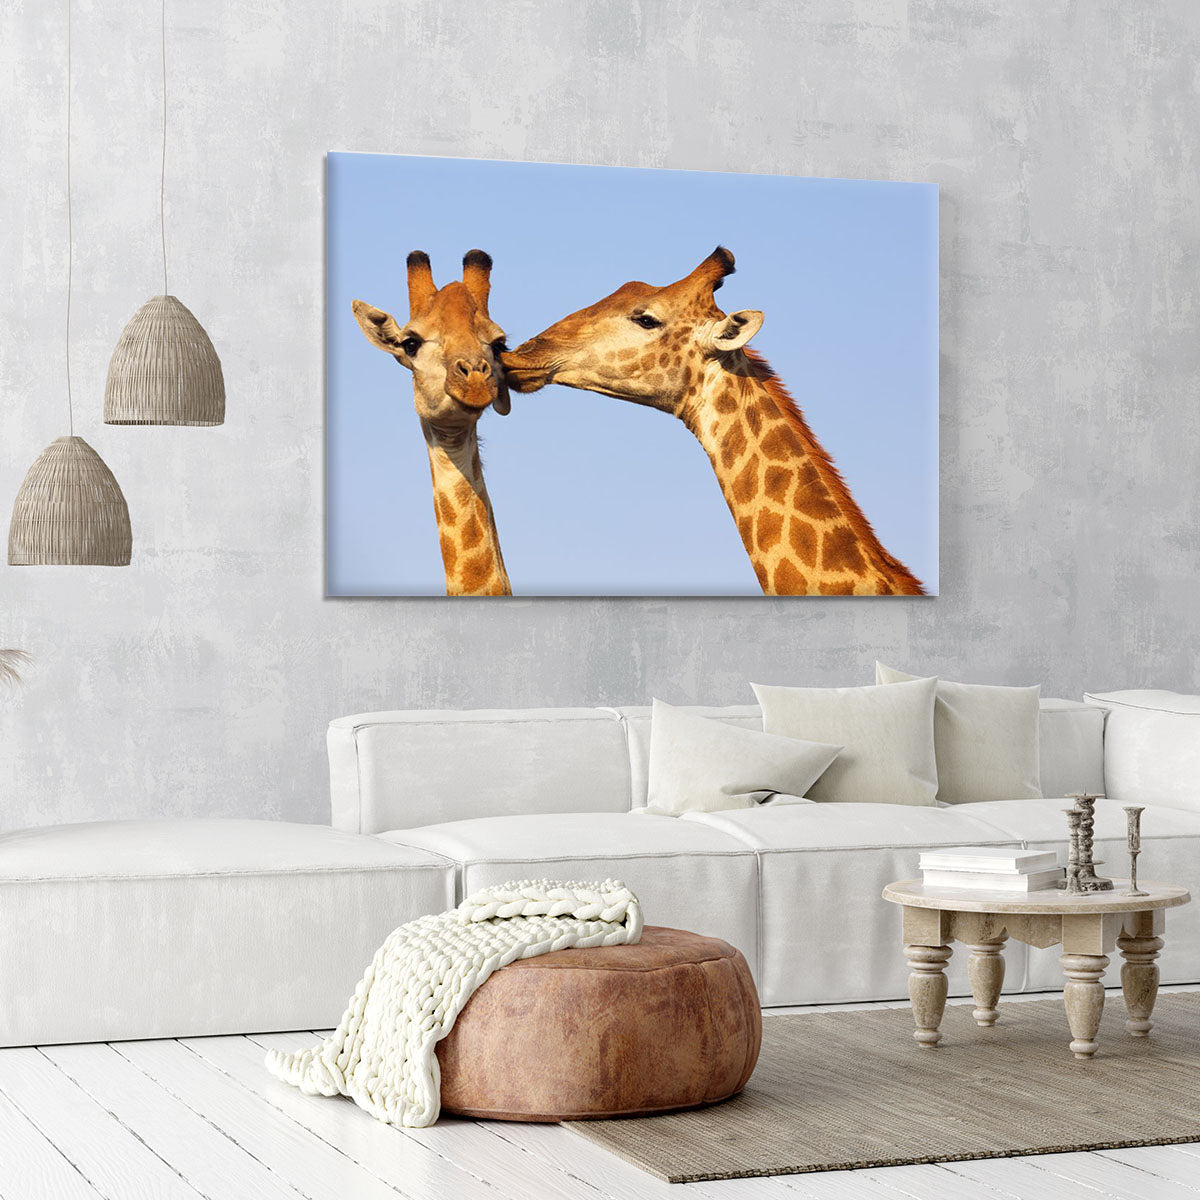 Giraffe pair bonding Canvas Print or Poster - Canvas Art Rocks - 6